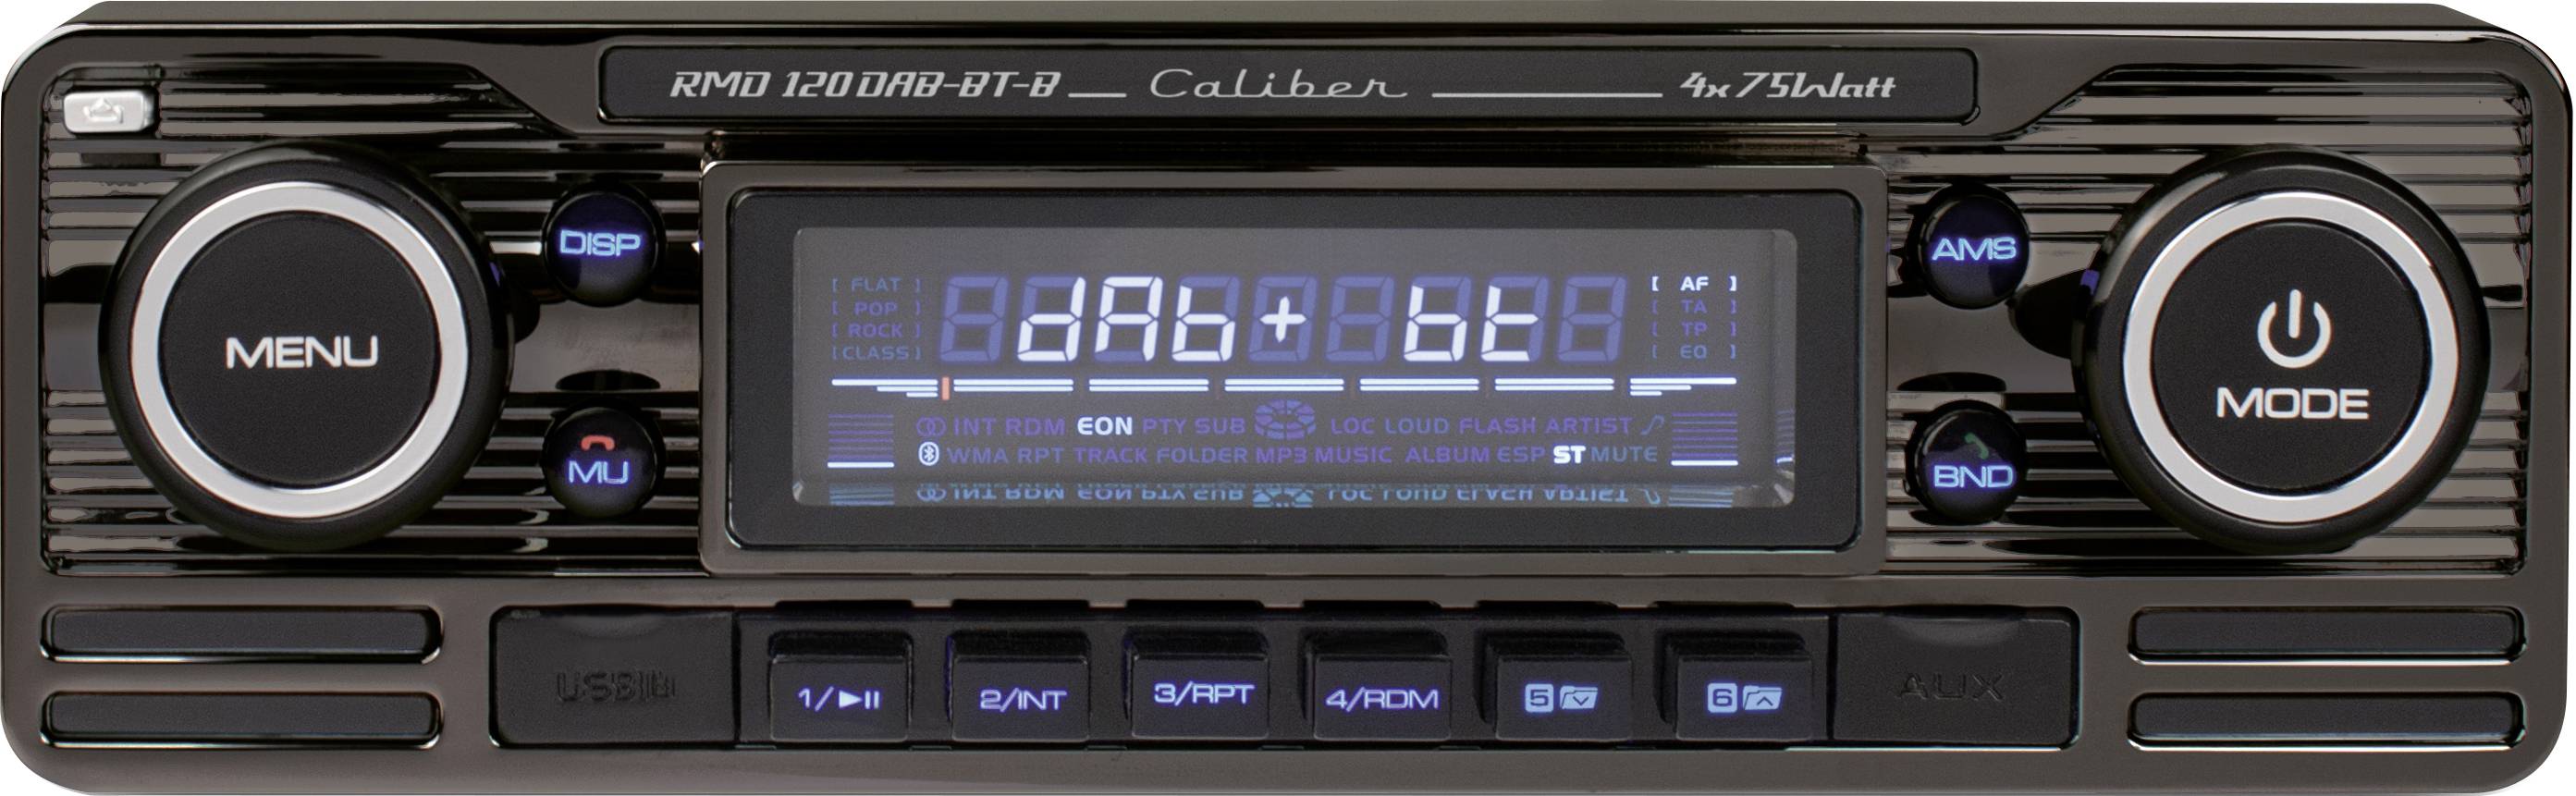 Sotel  Caliber RCD120DAB-BT-B Autoradio DAB+ Tuner, Bluetooth®-kit mains  libres